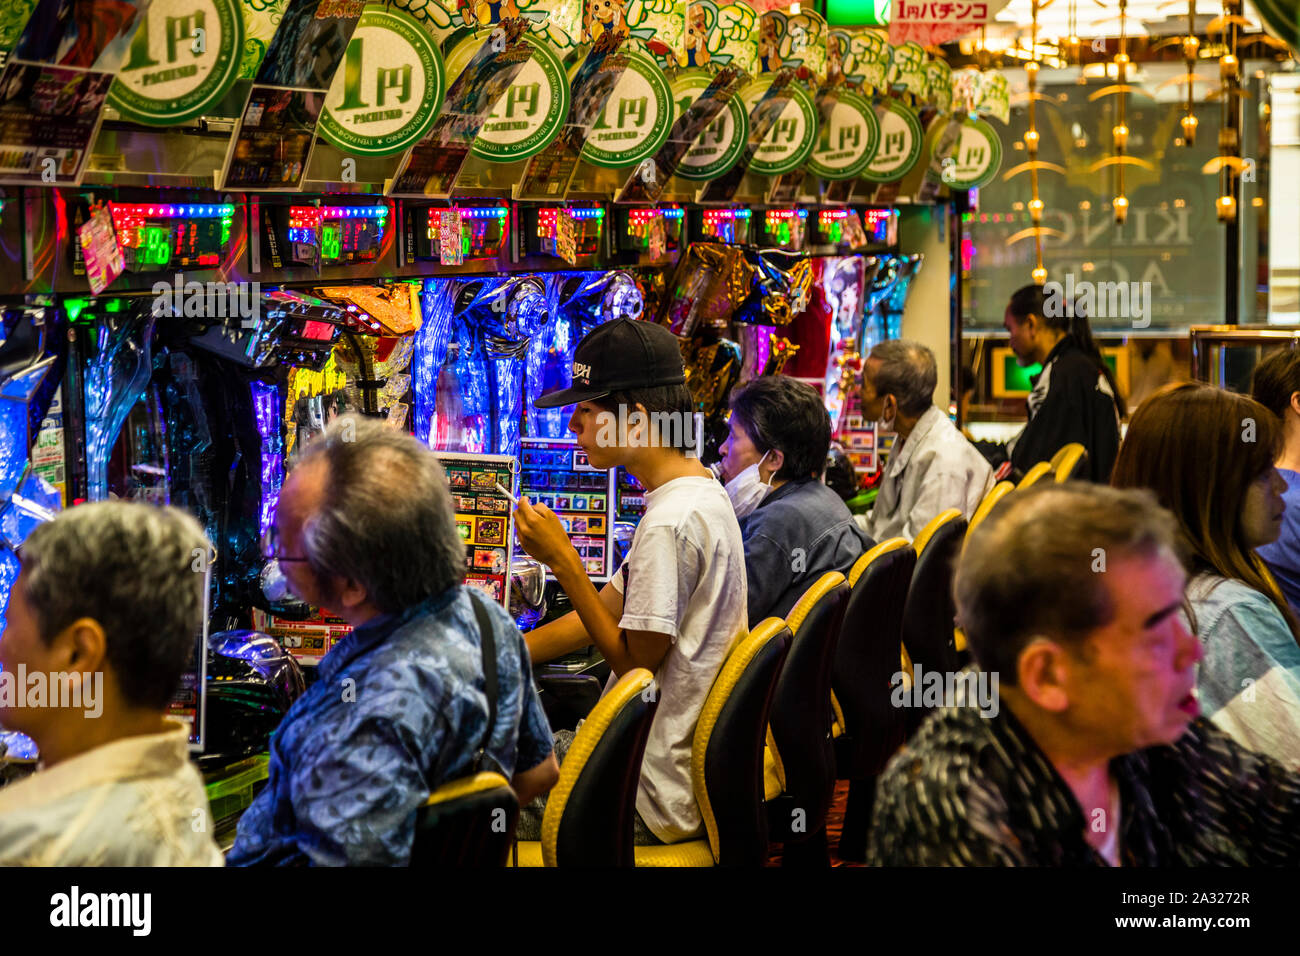 Pachinko Arcade Game in Ito, Japan Stock Photo